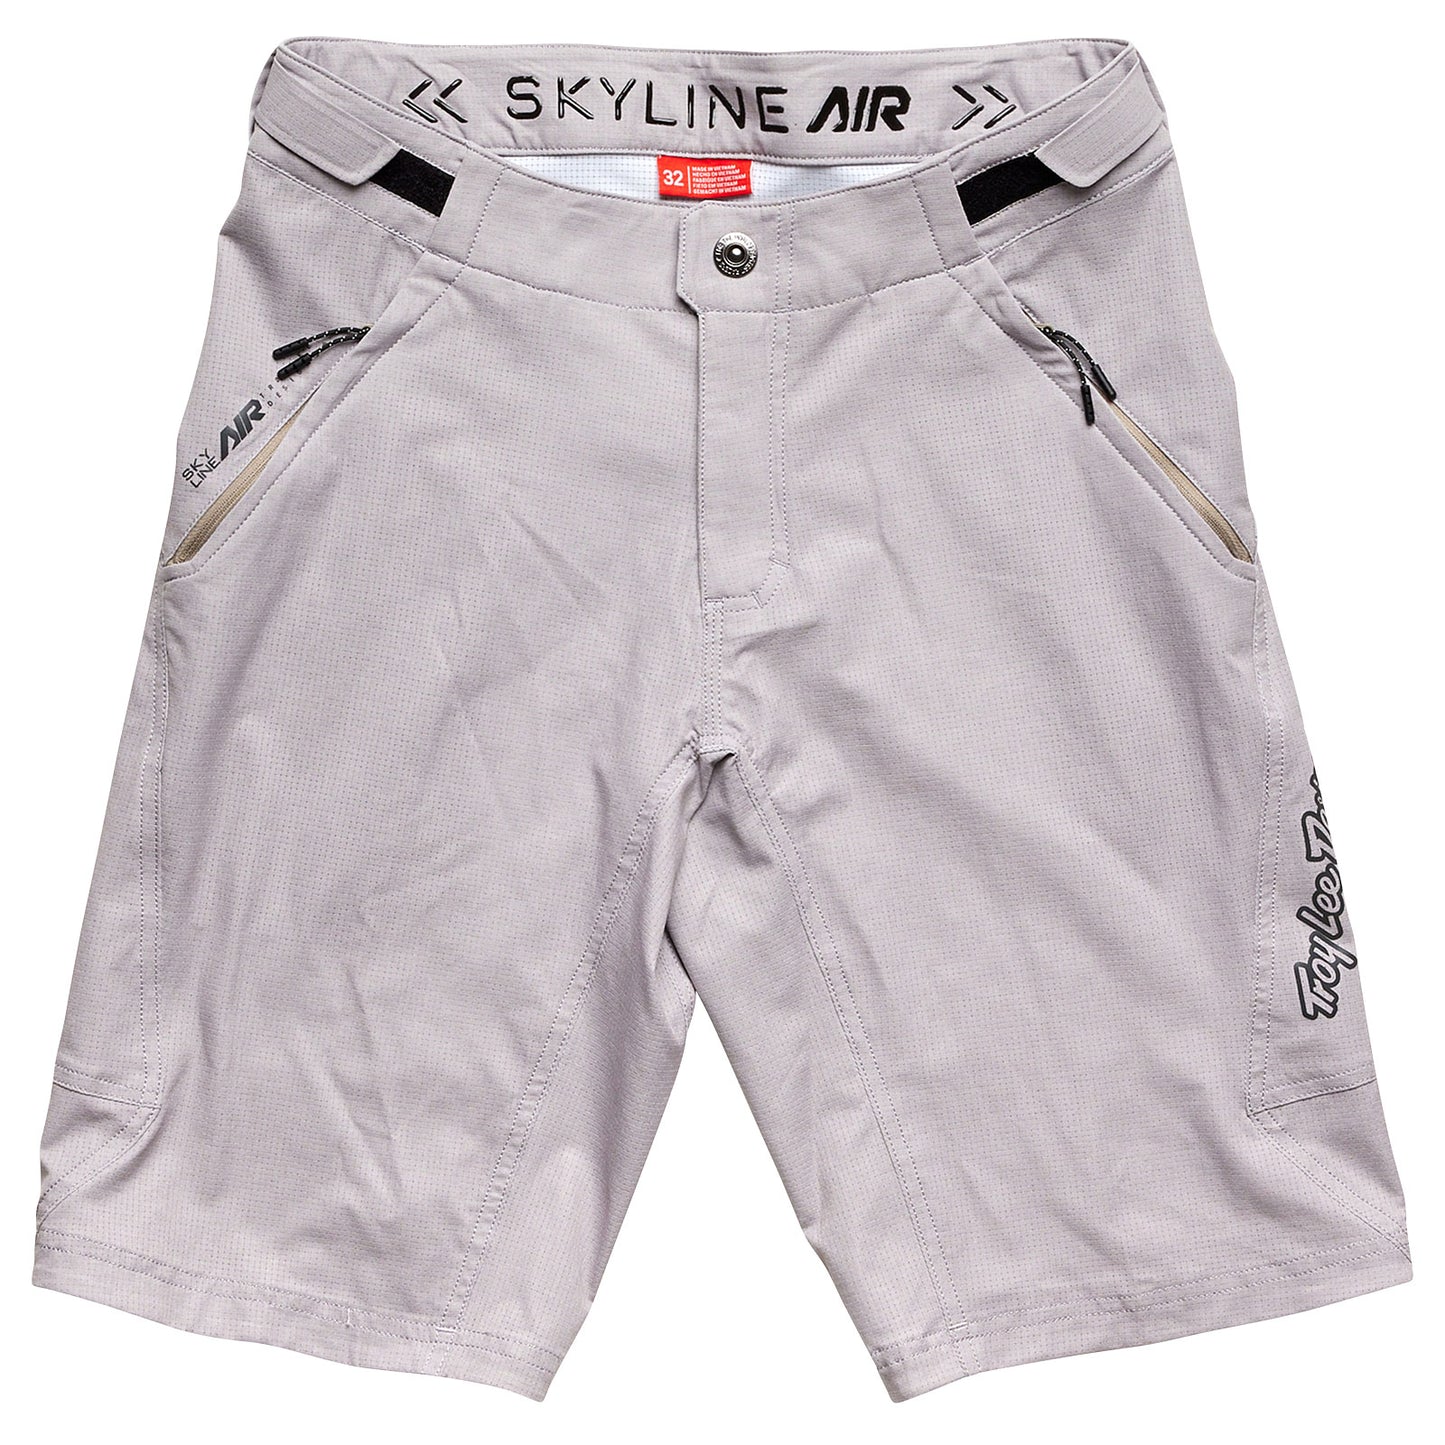 Skyline Air Short Shell Mono Charcoal